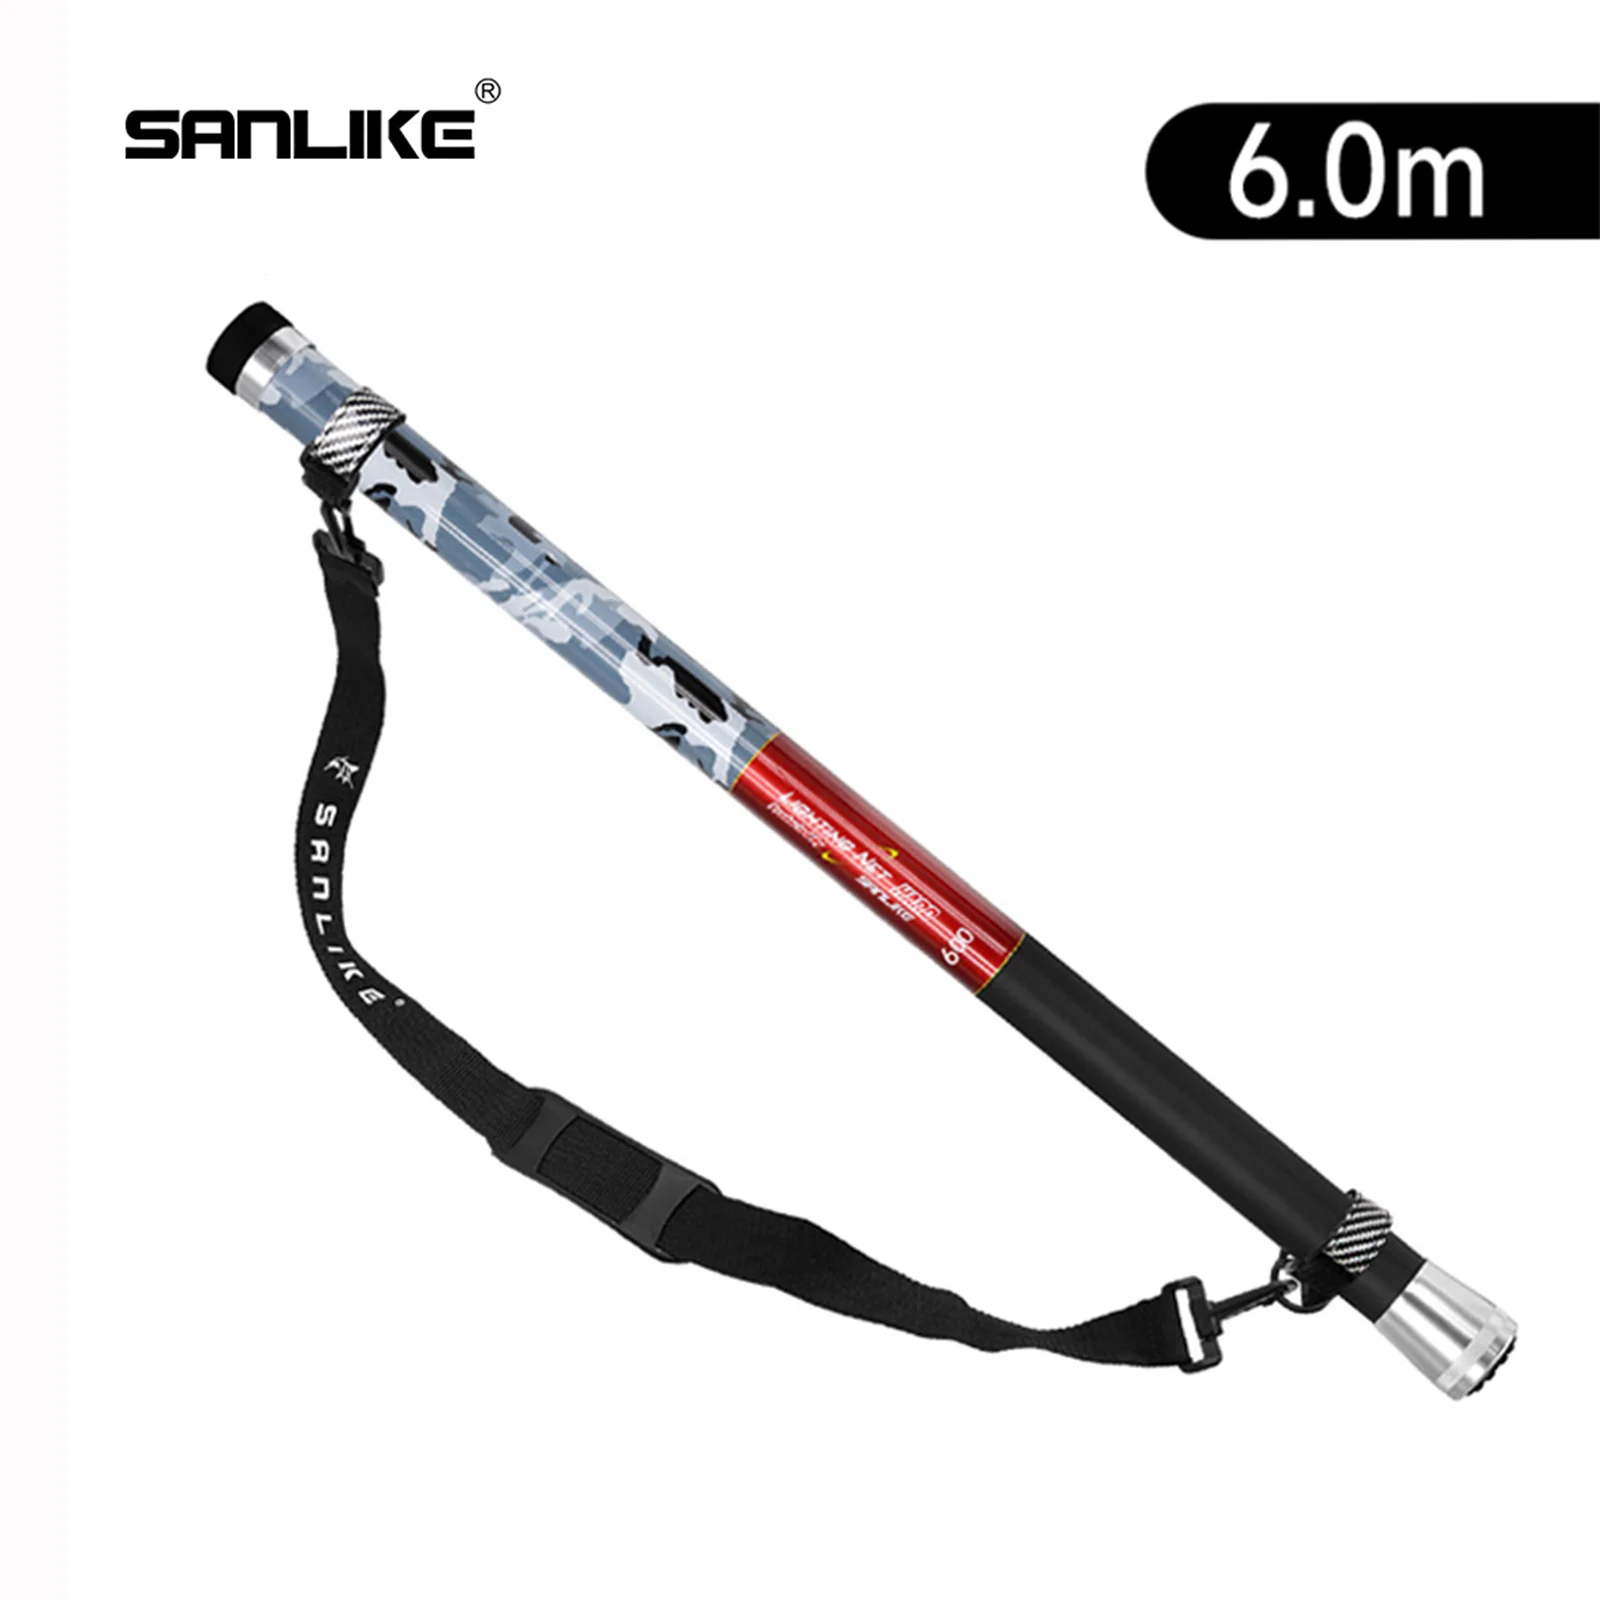 

SANLIKE 5/6m Fishing Landing Net Telescopic Carbon Pole Portable Retractable Long Handle Rod Fishing tool Accessories